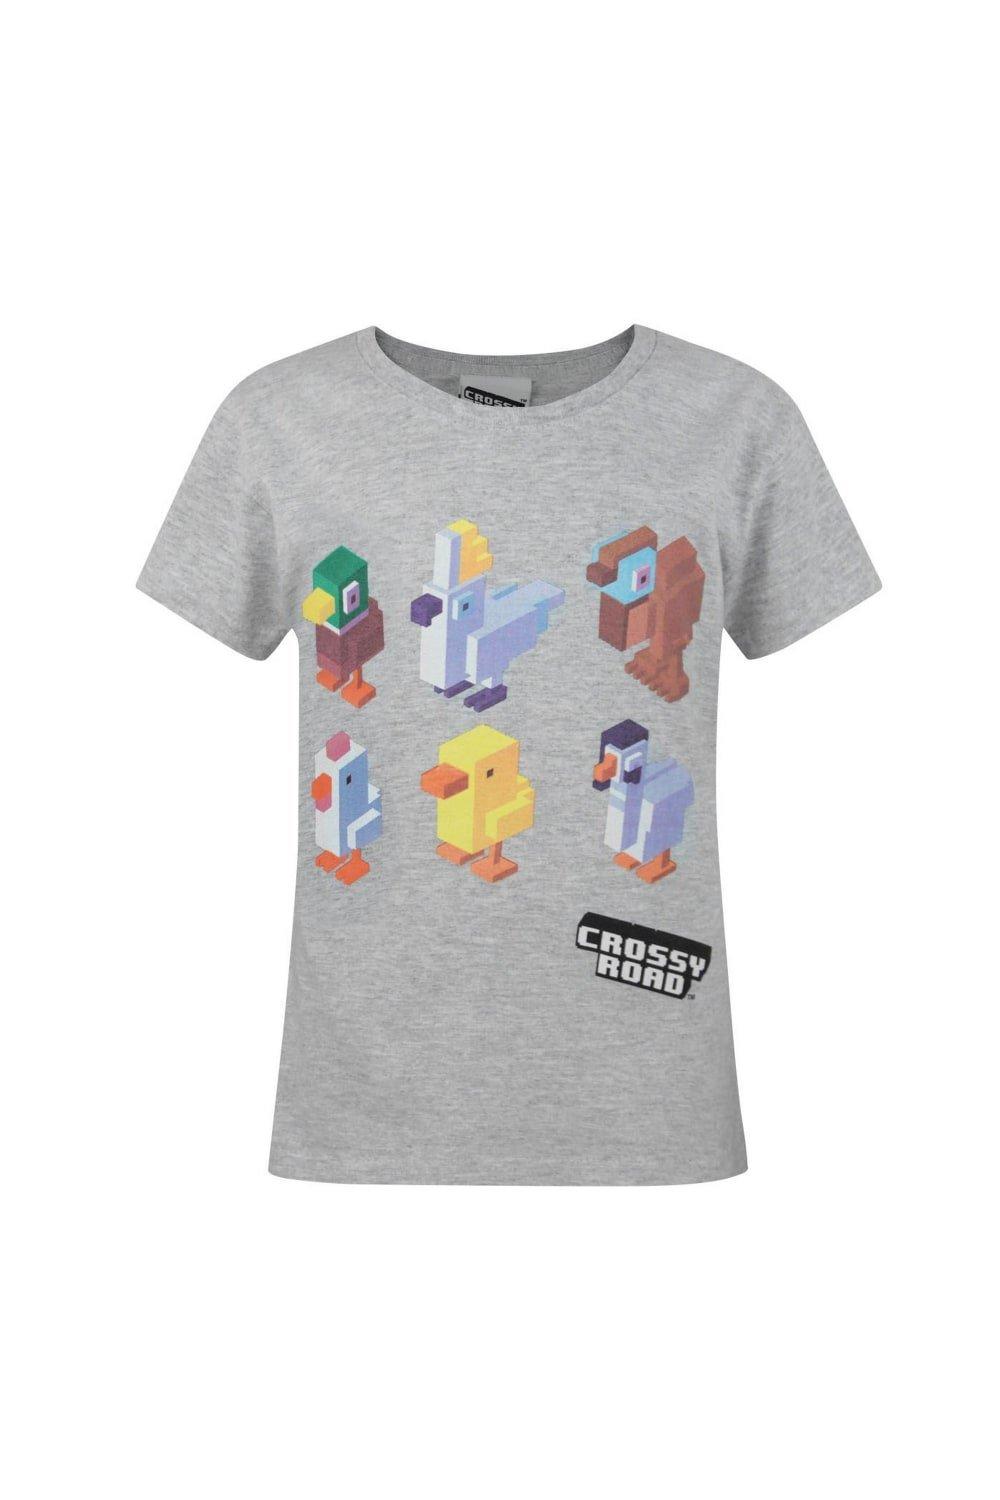 Crossy Road Characters T-Shirt